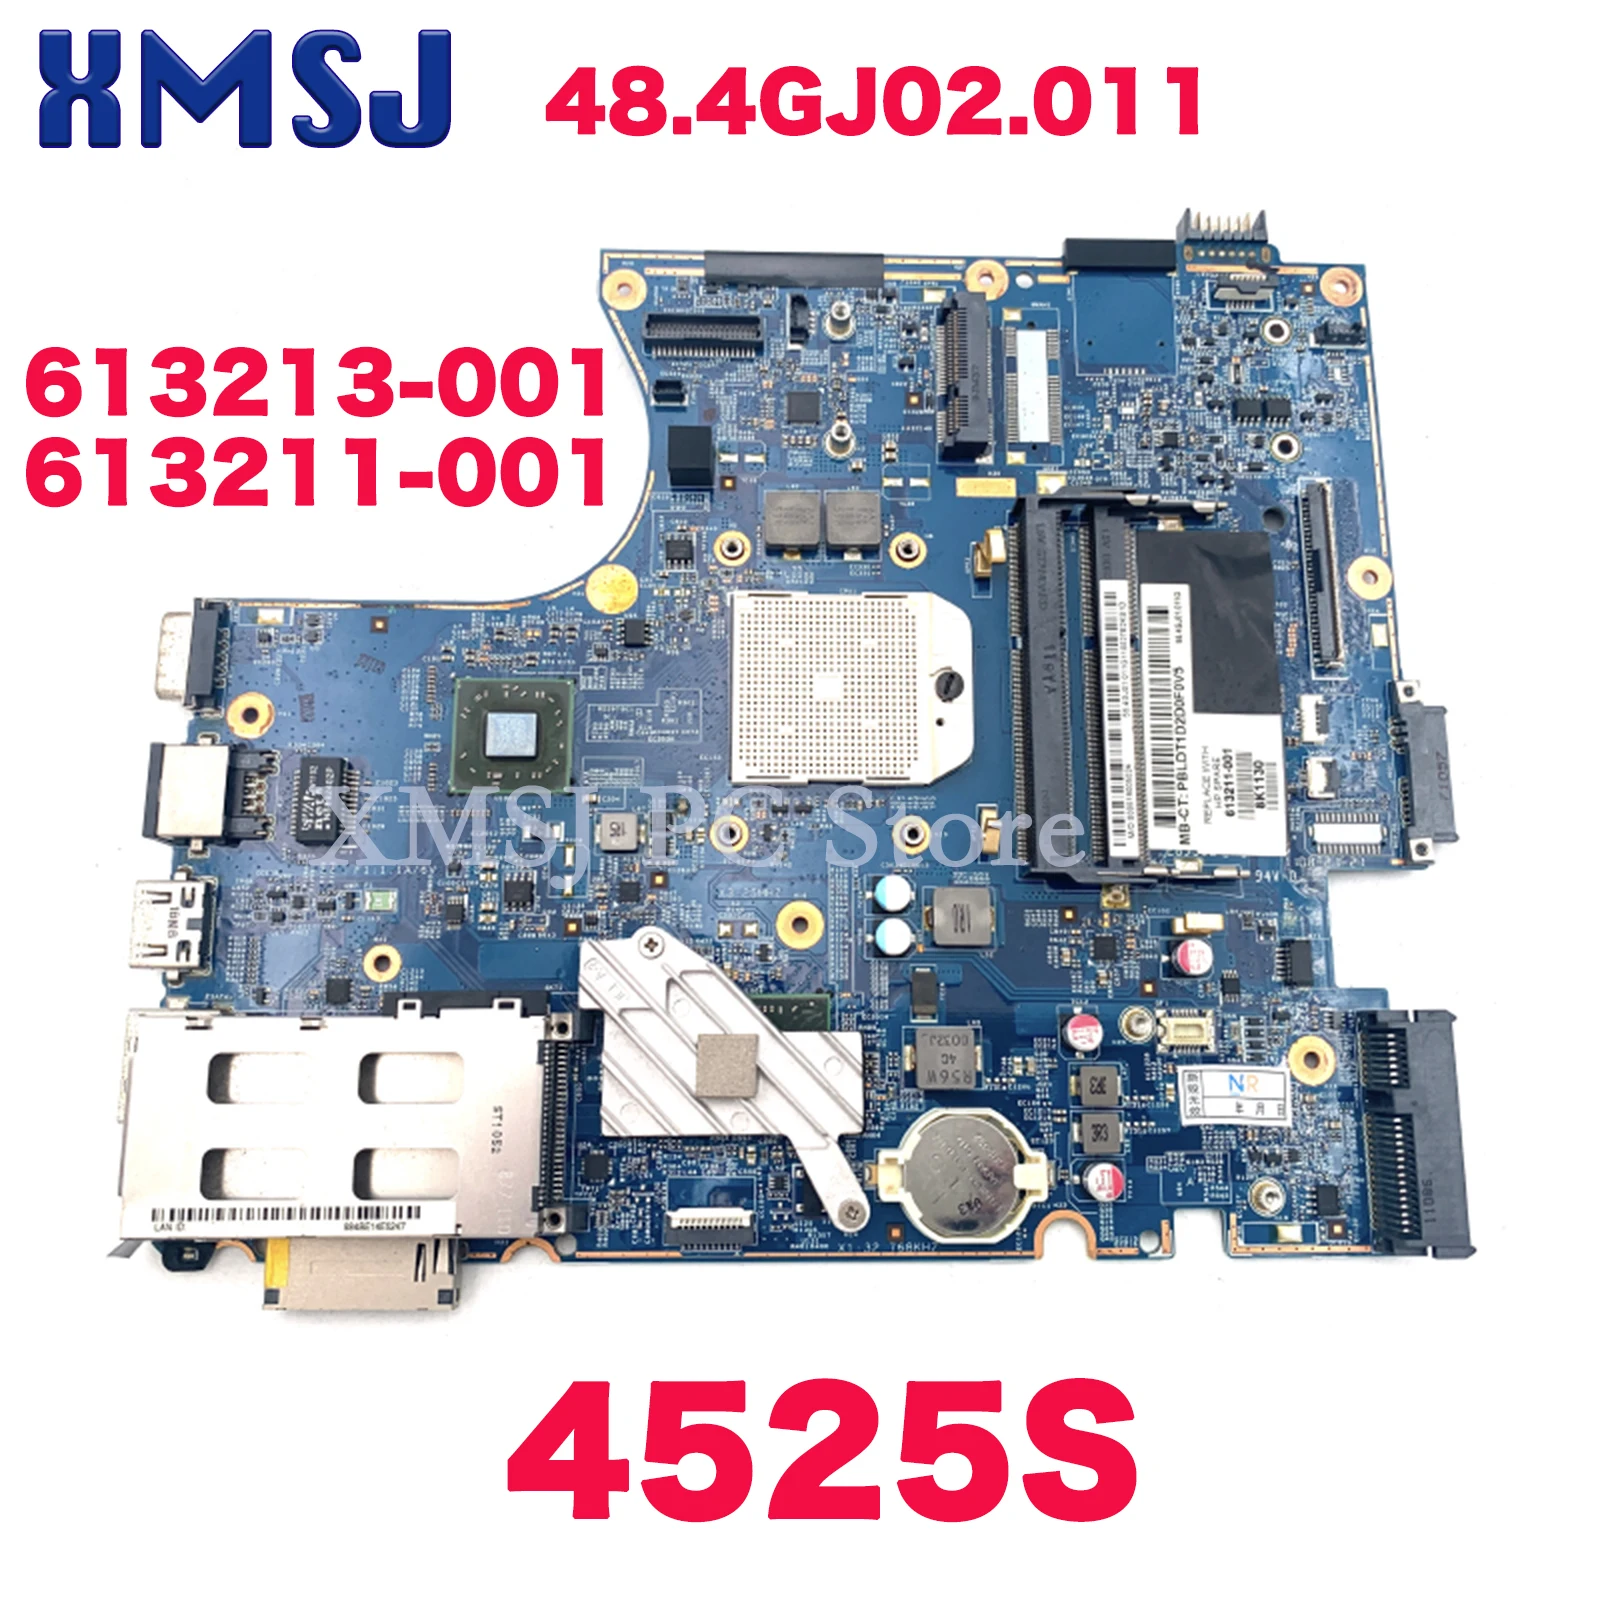 

XMSJ 48.4GJ02.011 for 613213-001 613211-001 HP Probook 4525S Laptop Motherboard Socket S1 DDR3 free CPU